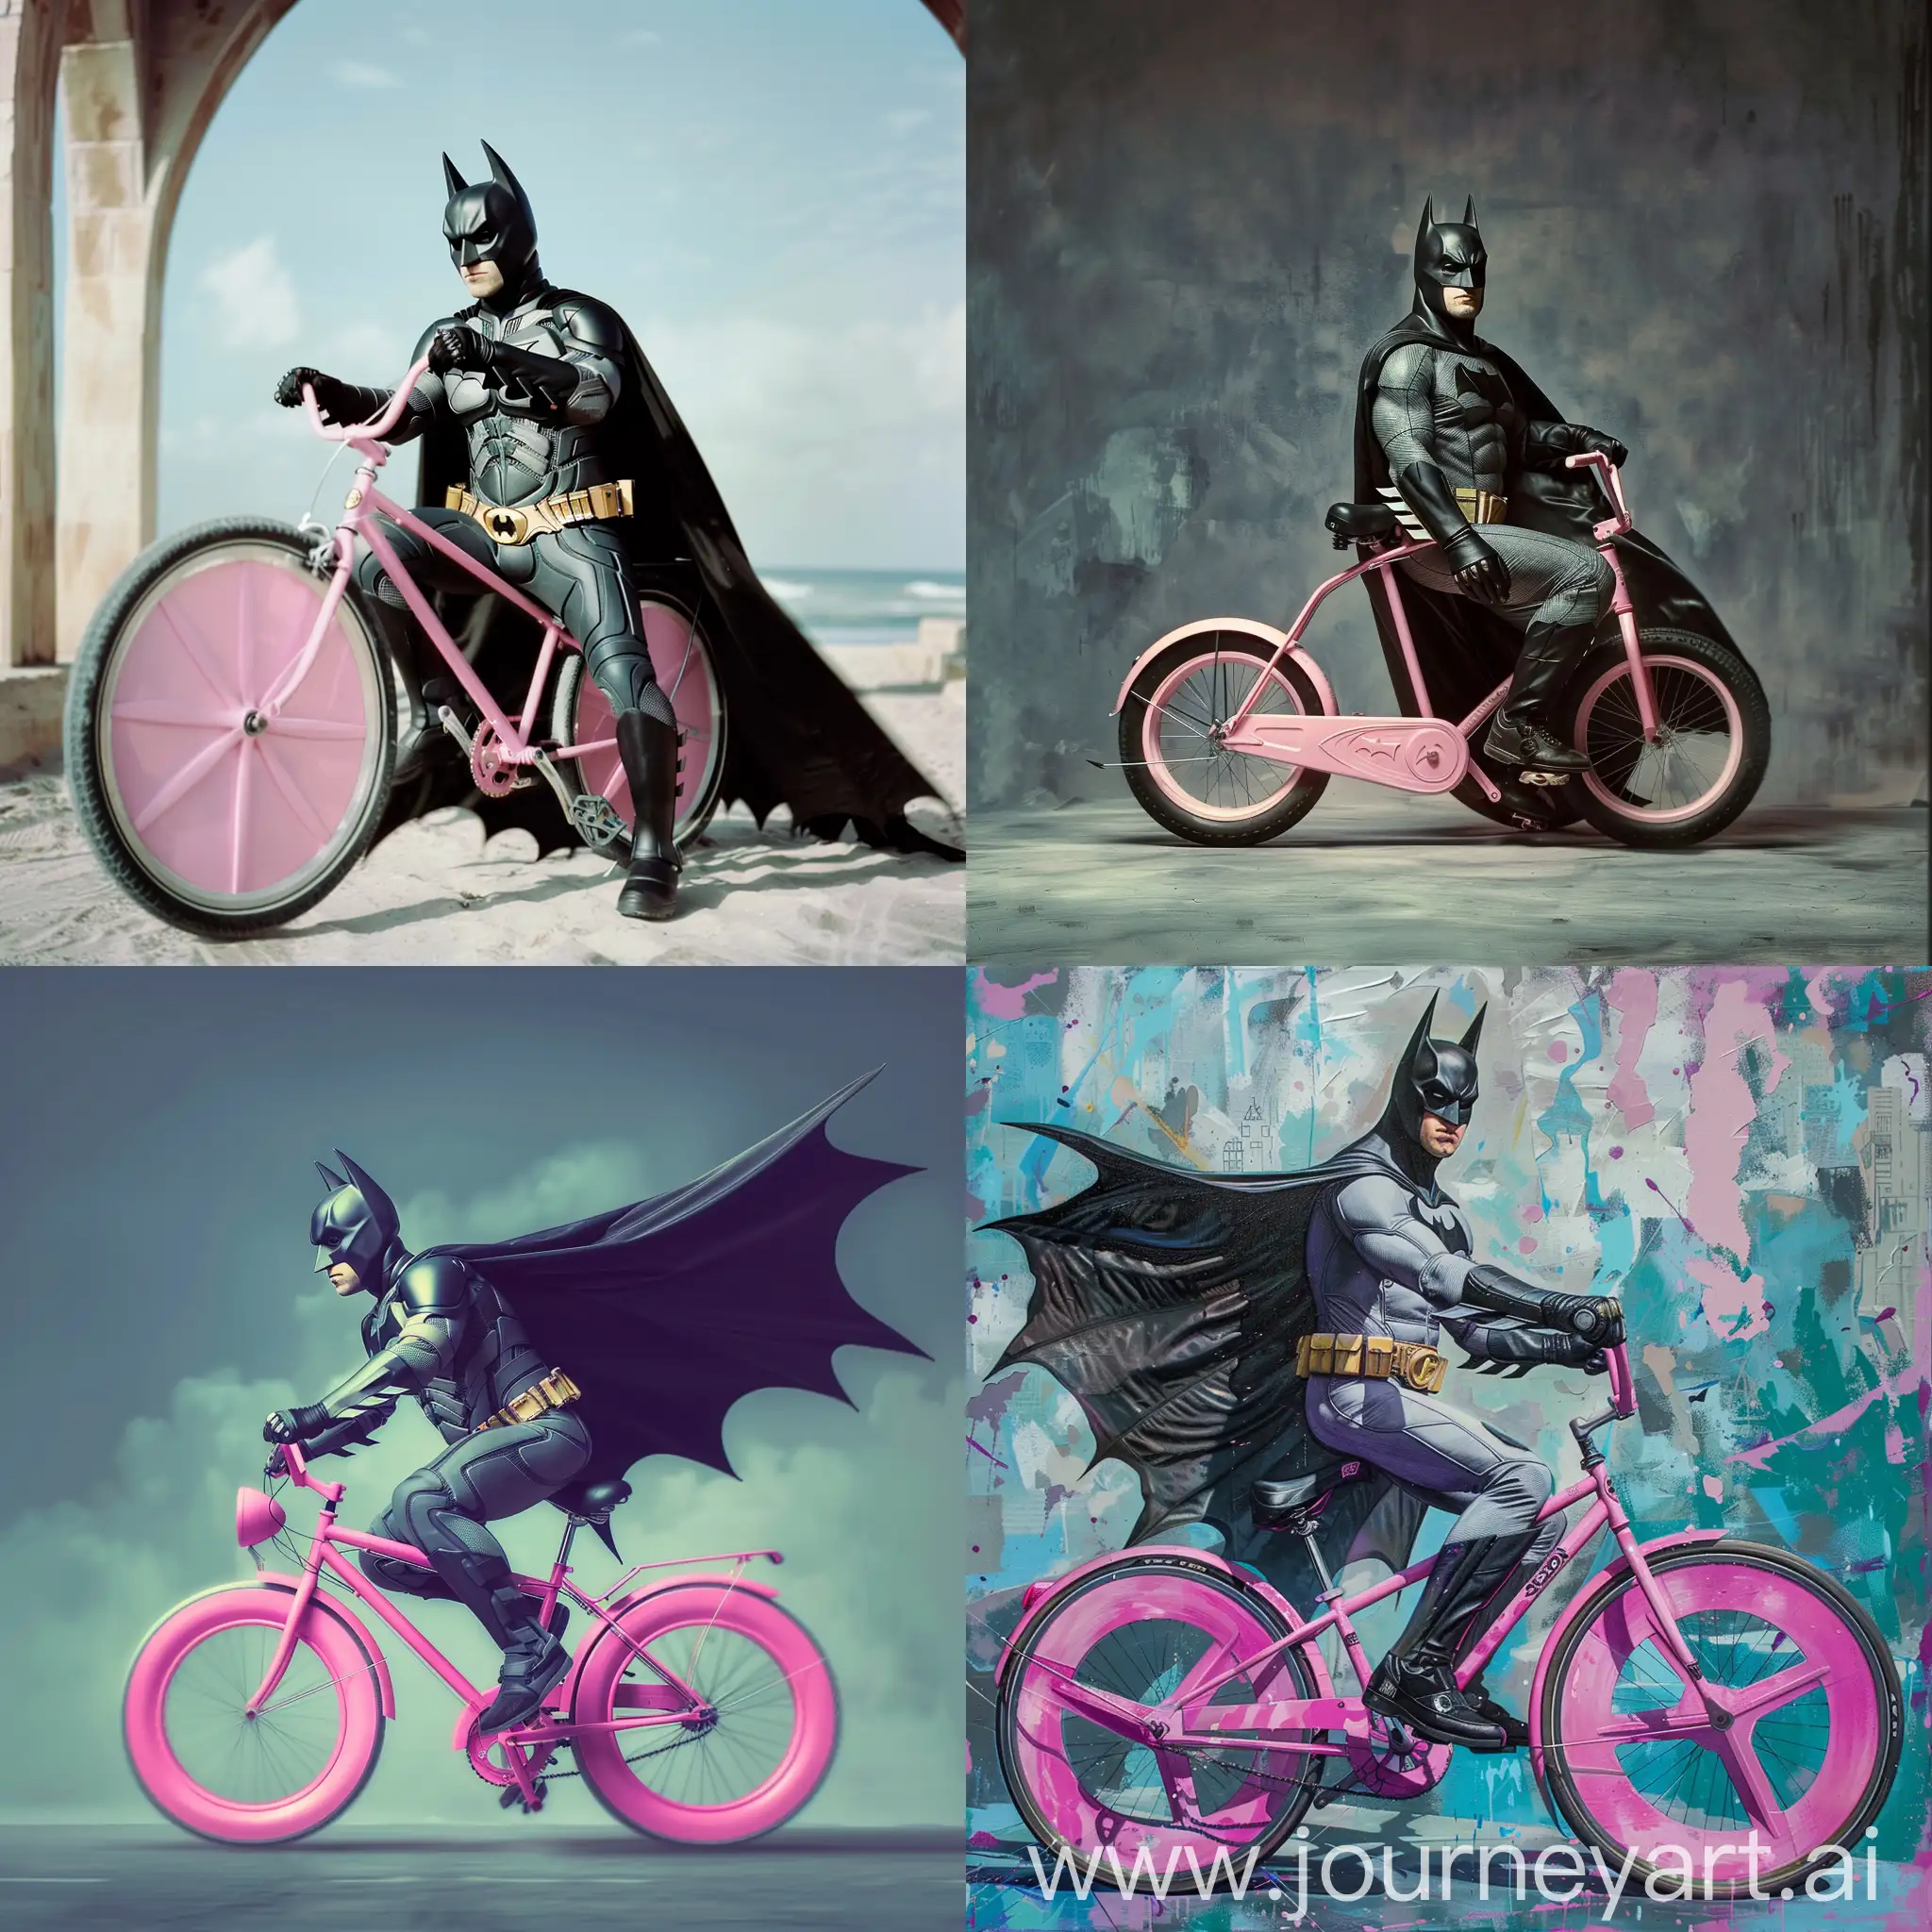 Batman-Riding-a-Pink-Bicycle-in-Urban-Environment